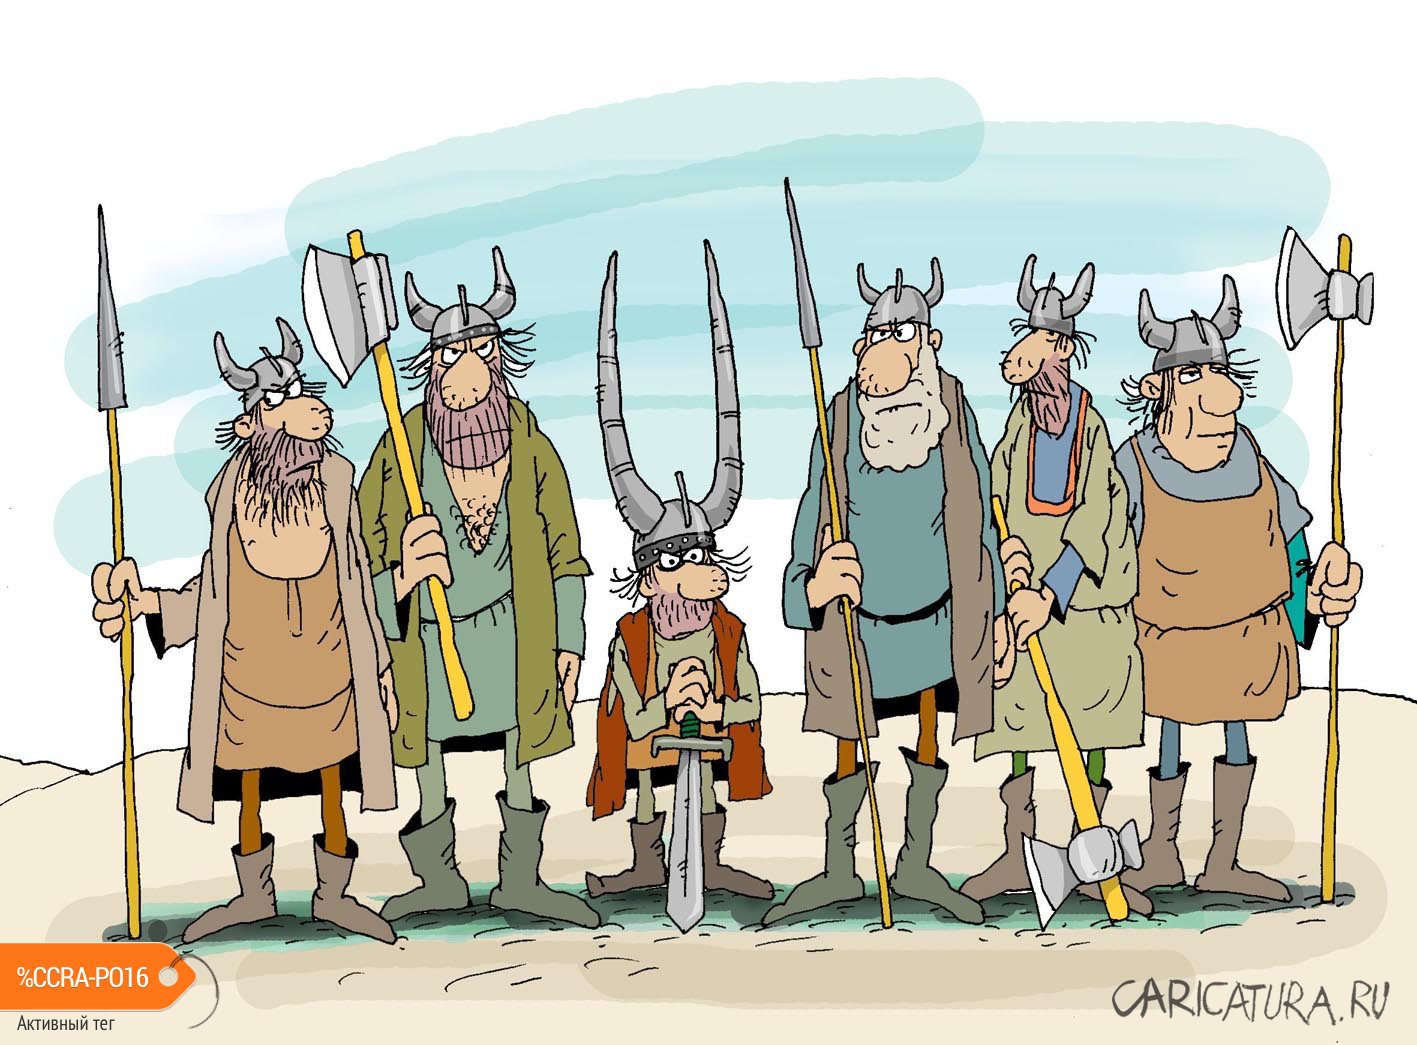 Карикатура "Суровый викинг", Николай Крутиков